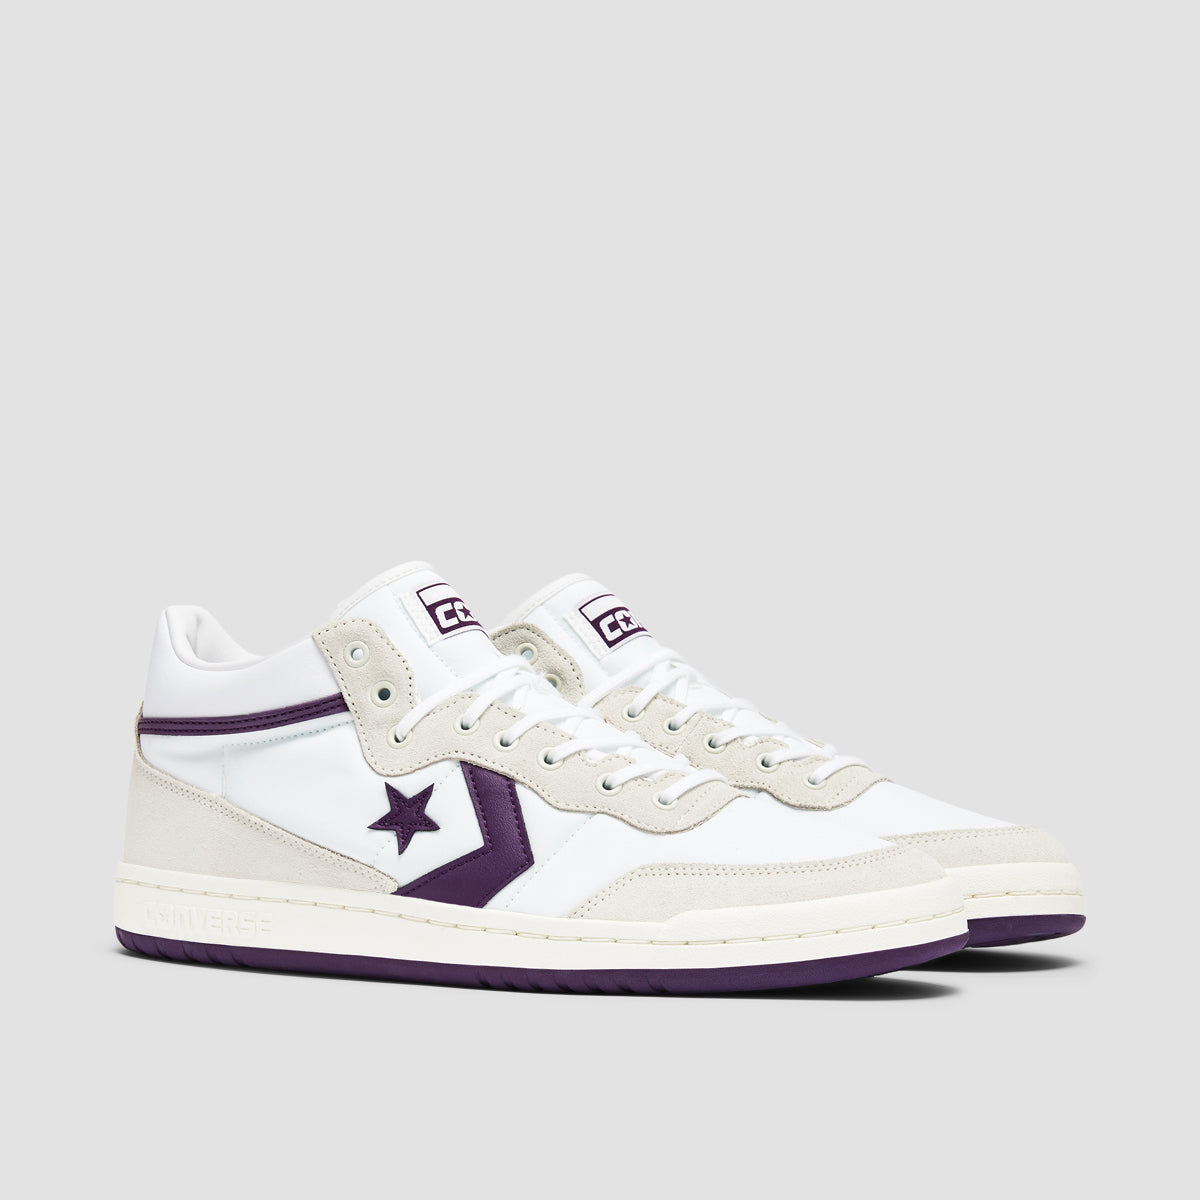 Converse Fastbreak Pro Mid Top Shoes - White/Vaporous Grey/Night Purple